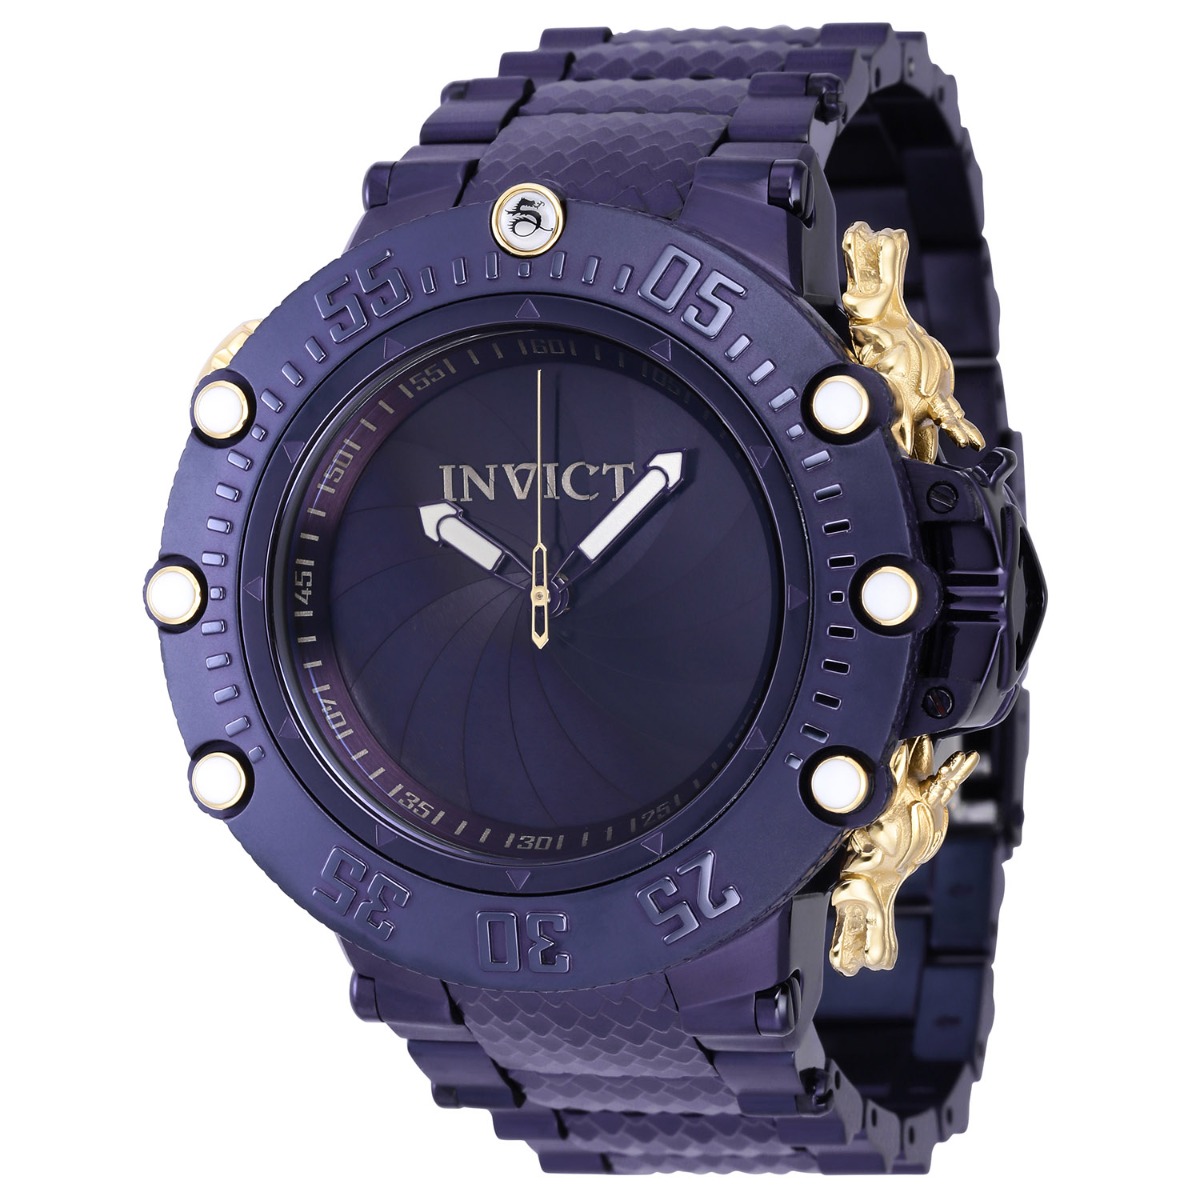 Invicta Subaqua 0.11 Carat Diamond Swiss Ronda 5050.C Caliber Men's Watch  w/ Mother of Pearl Dial - 52mm, Purple (38715)